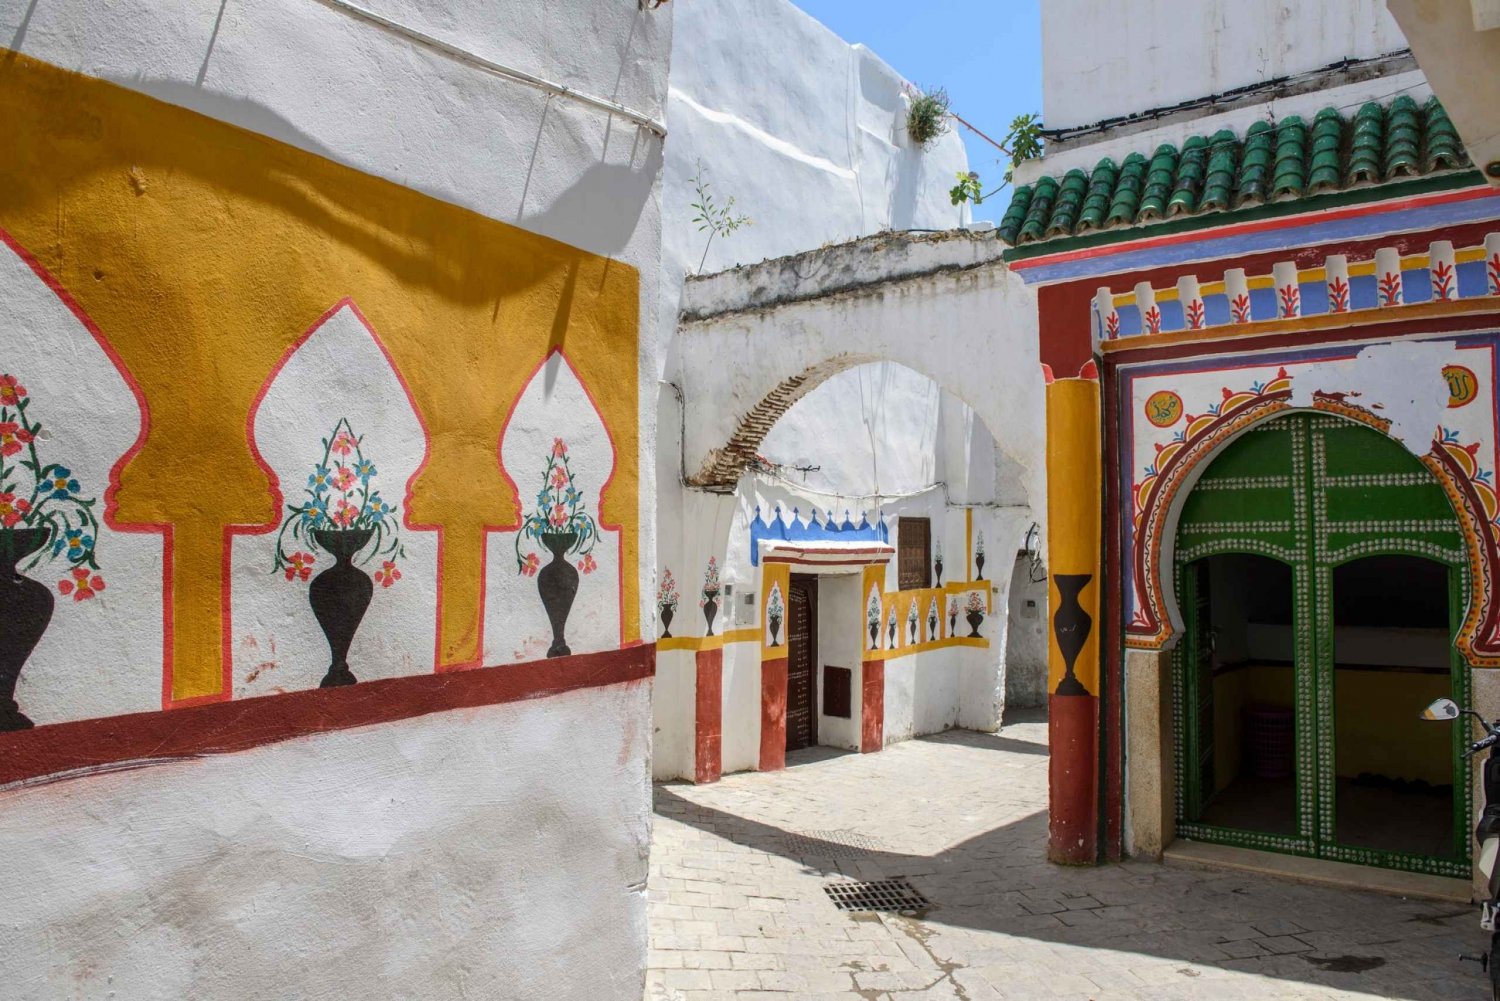 From Malaga and Costa del Sol: Day Trip to Tetouan, Morocco